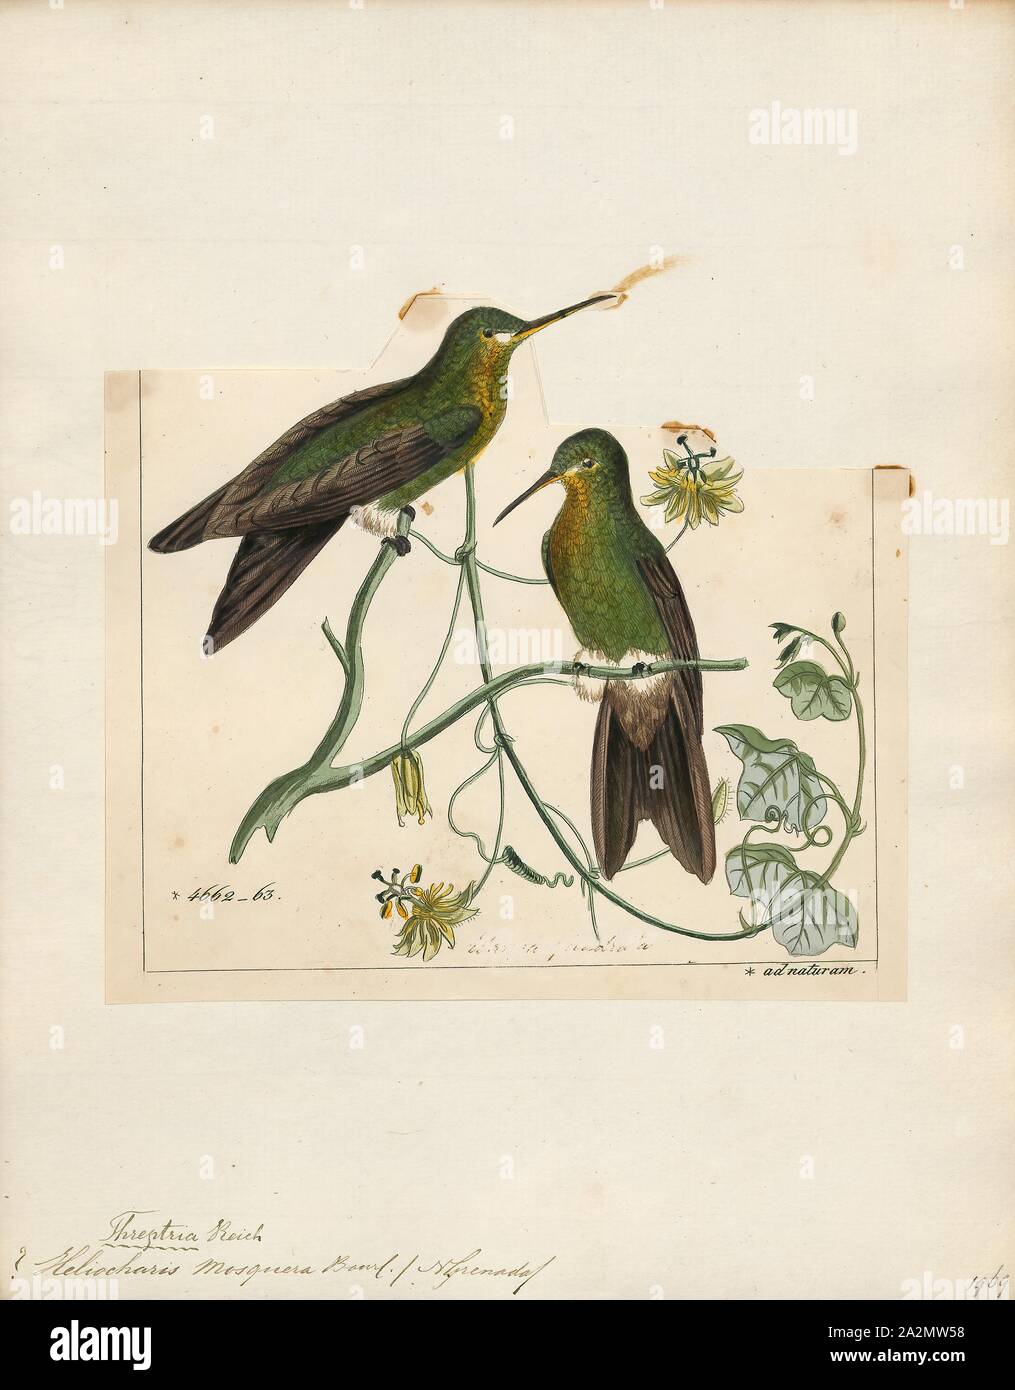 Hylocharis mosquera, Print, Hylocharis is a genus of hummingbird, in the family Trochilidae., 1820-1860 Stock Photo